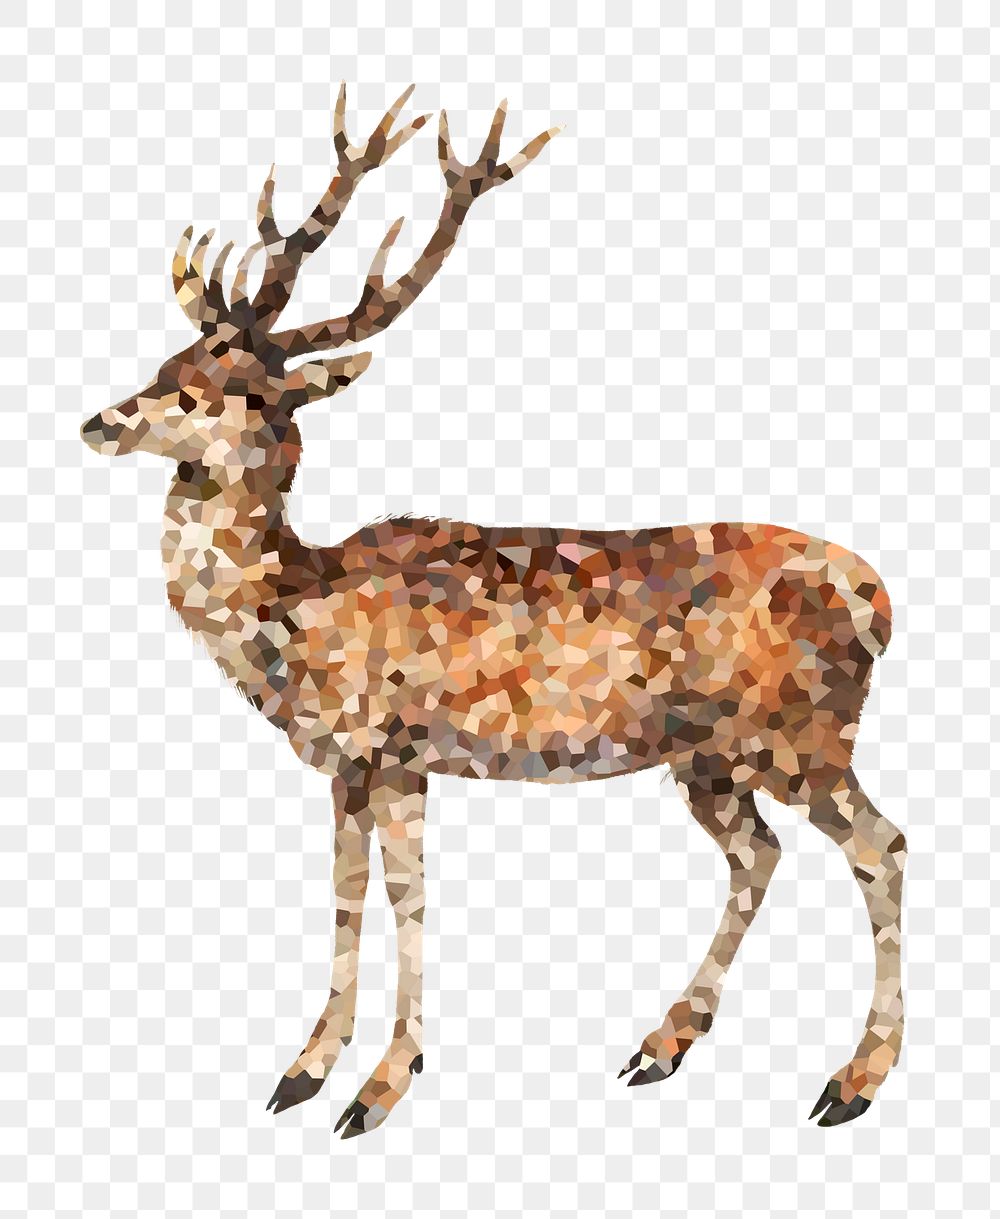 Crystallized style deer illustration design element